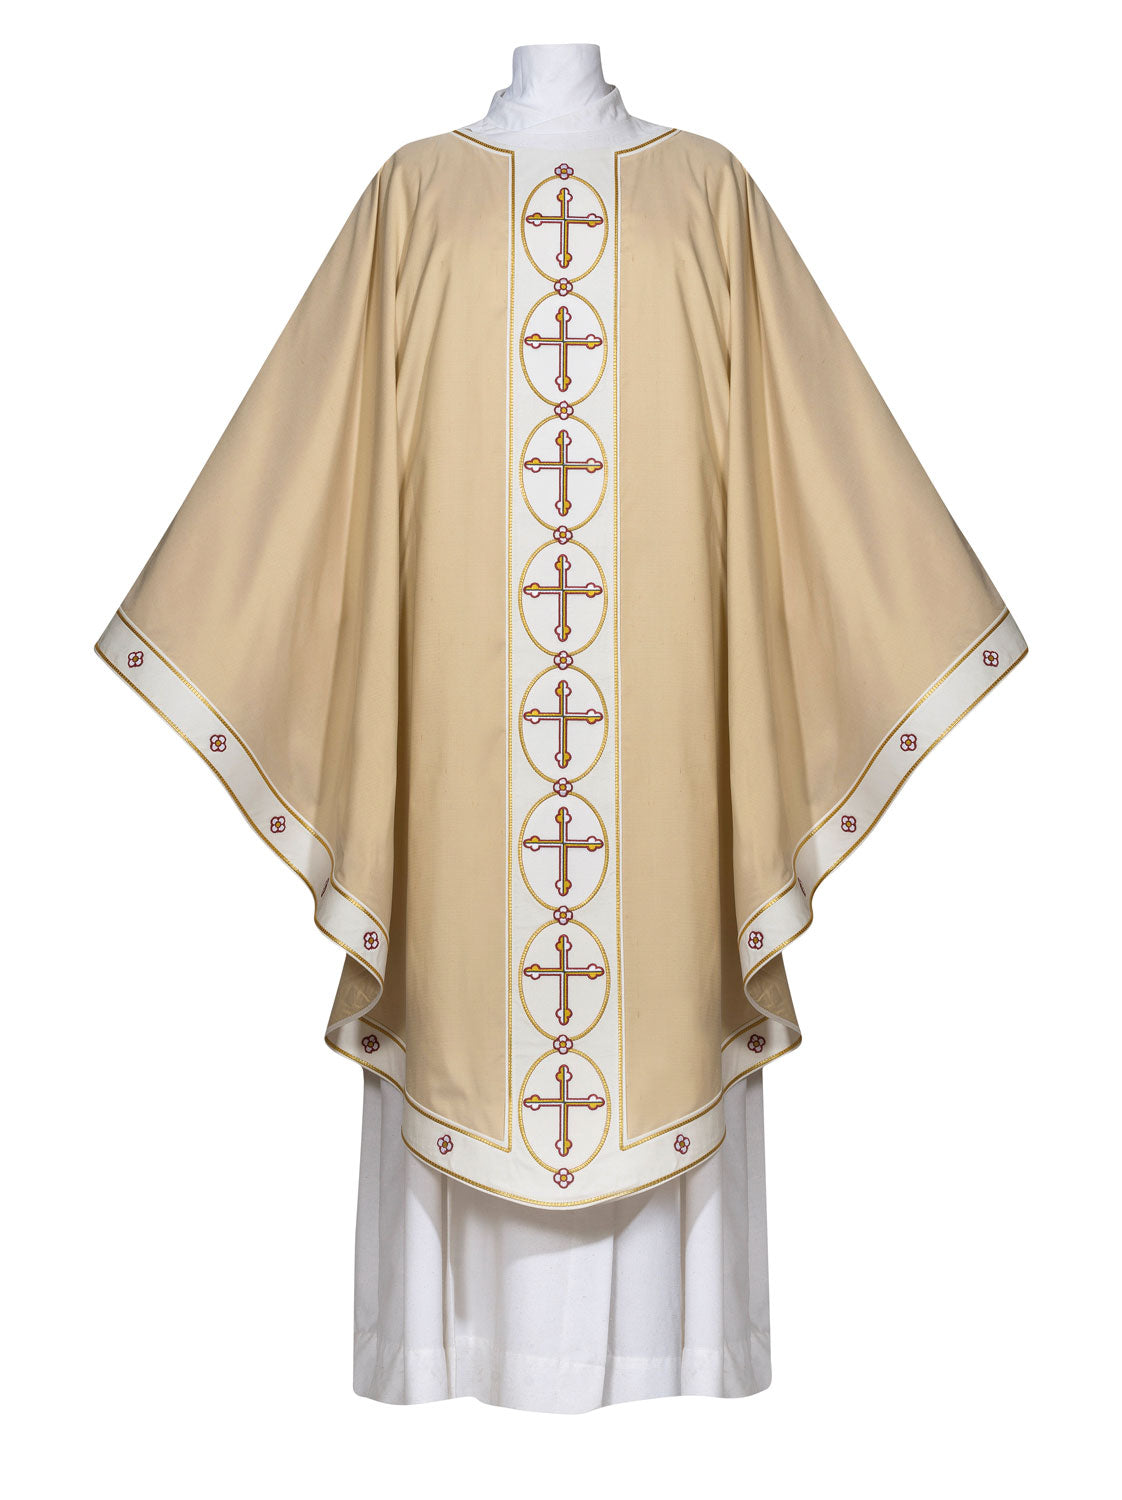 papal-chasuble-101-14170-sm.jpg